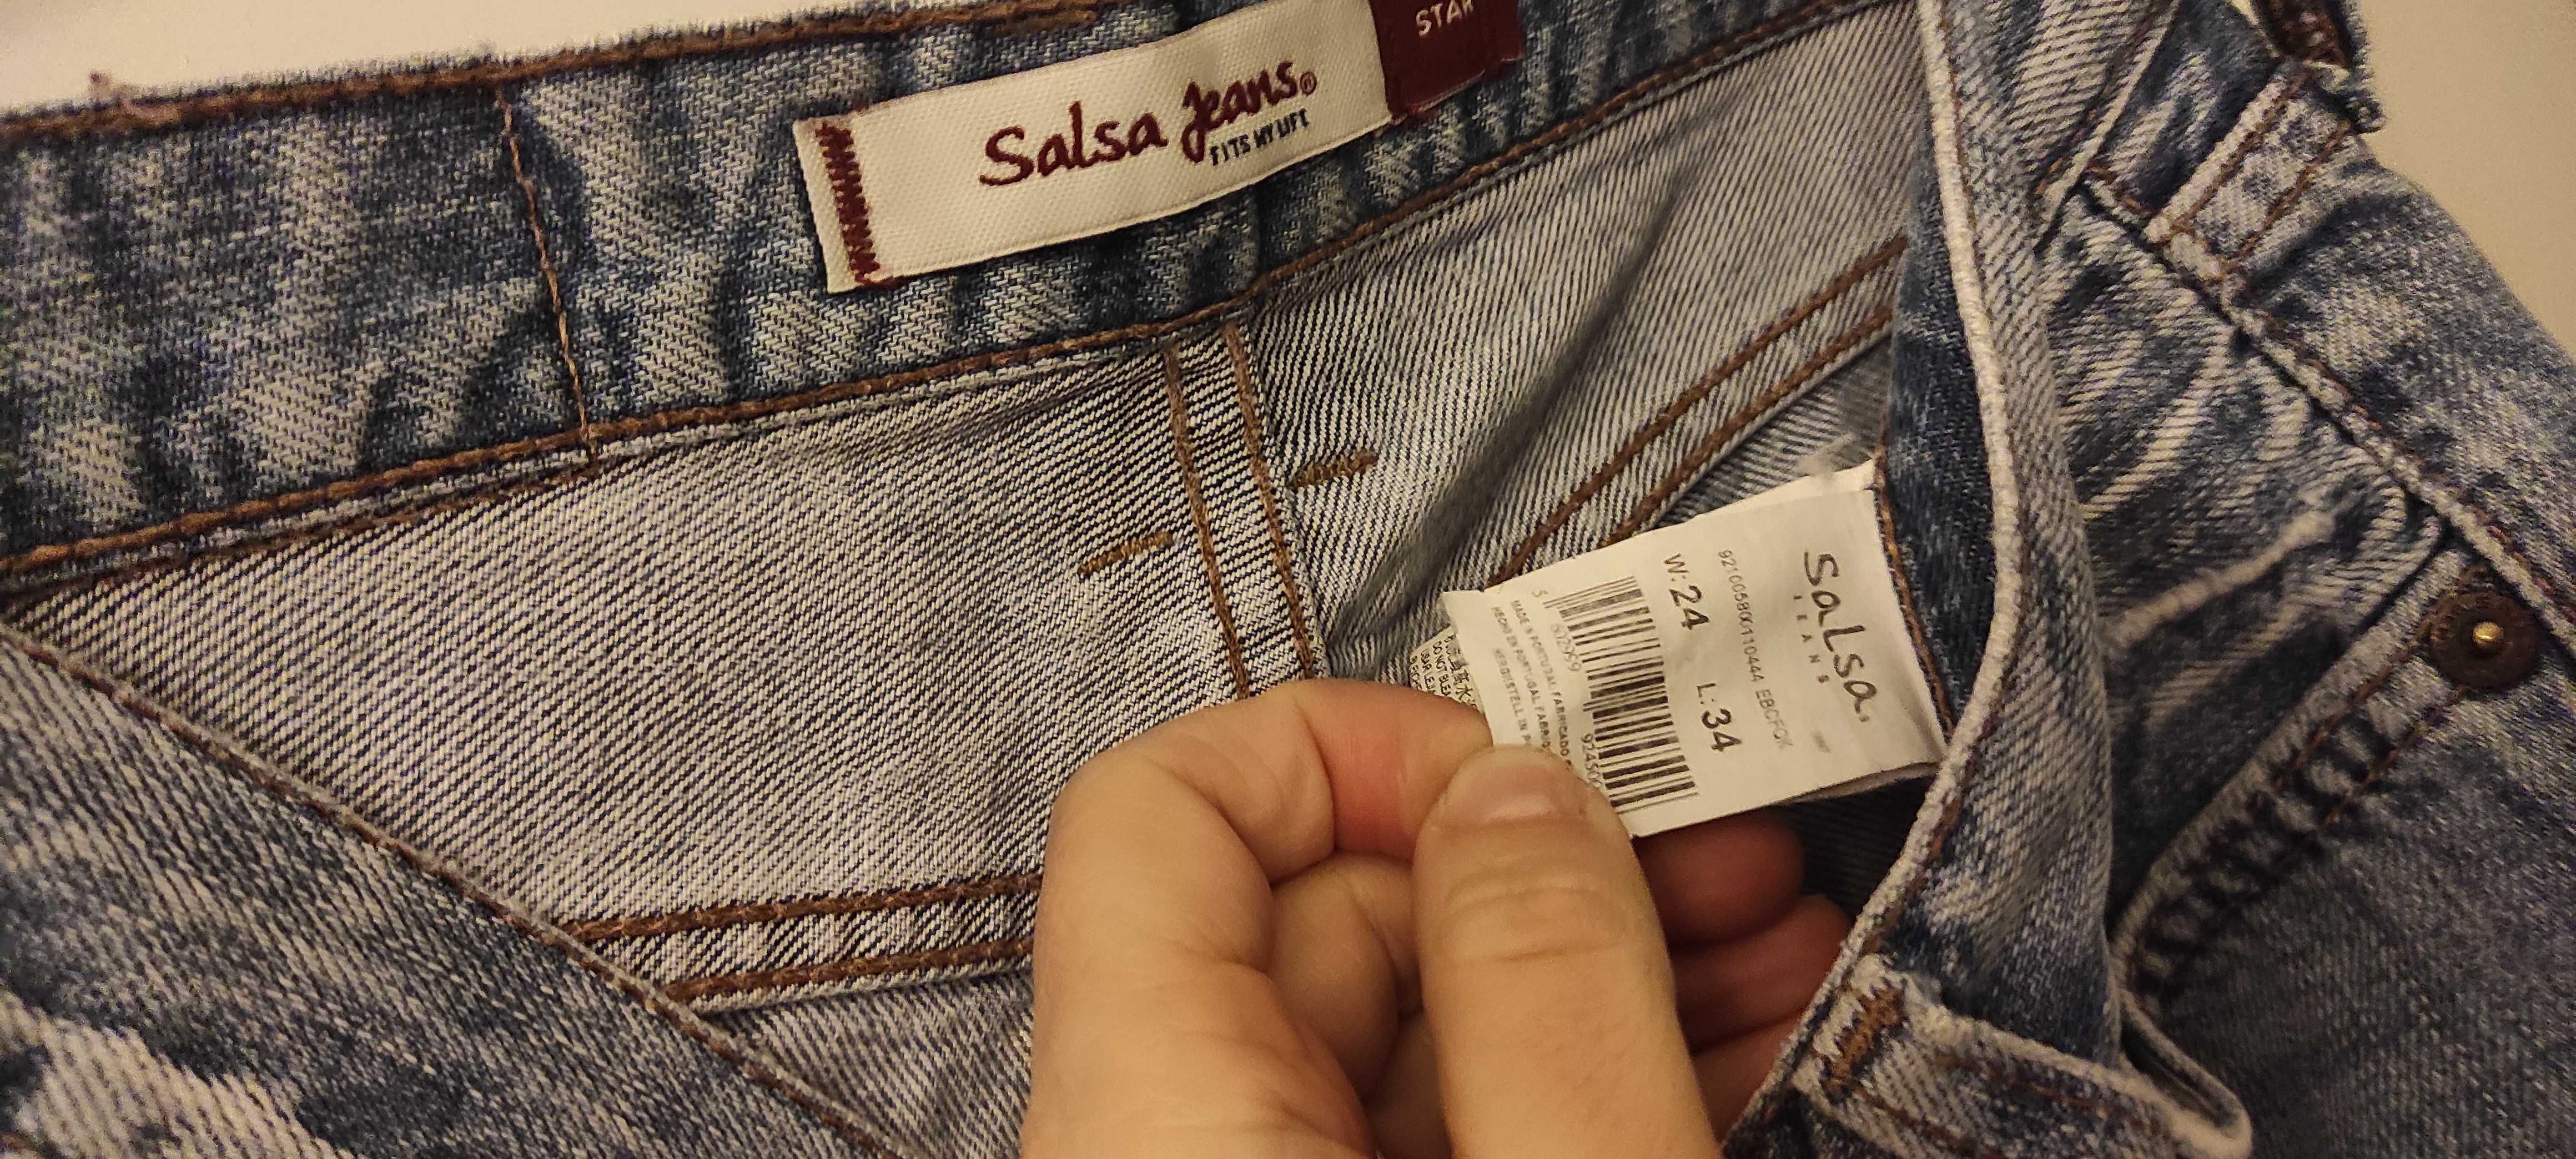 Jeans da Salsa, número 32